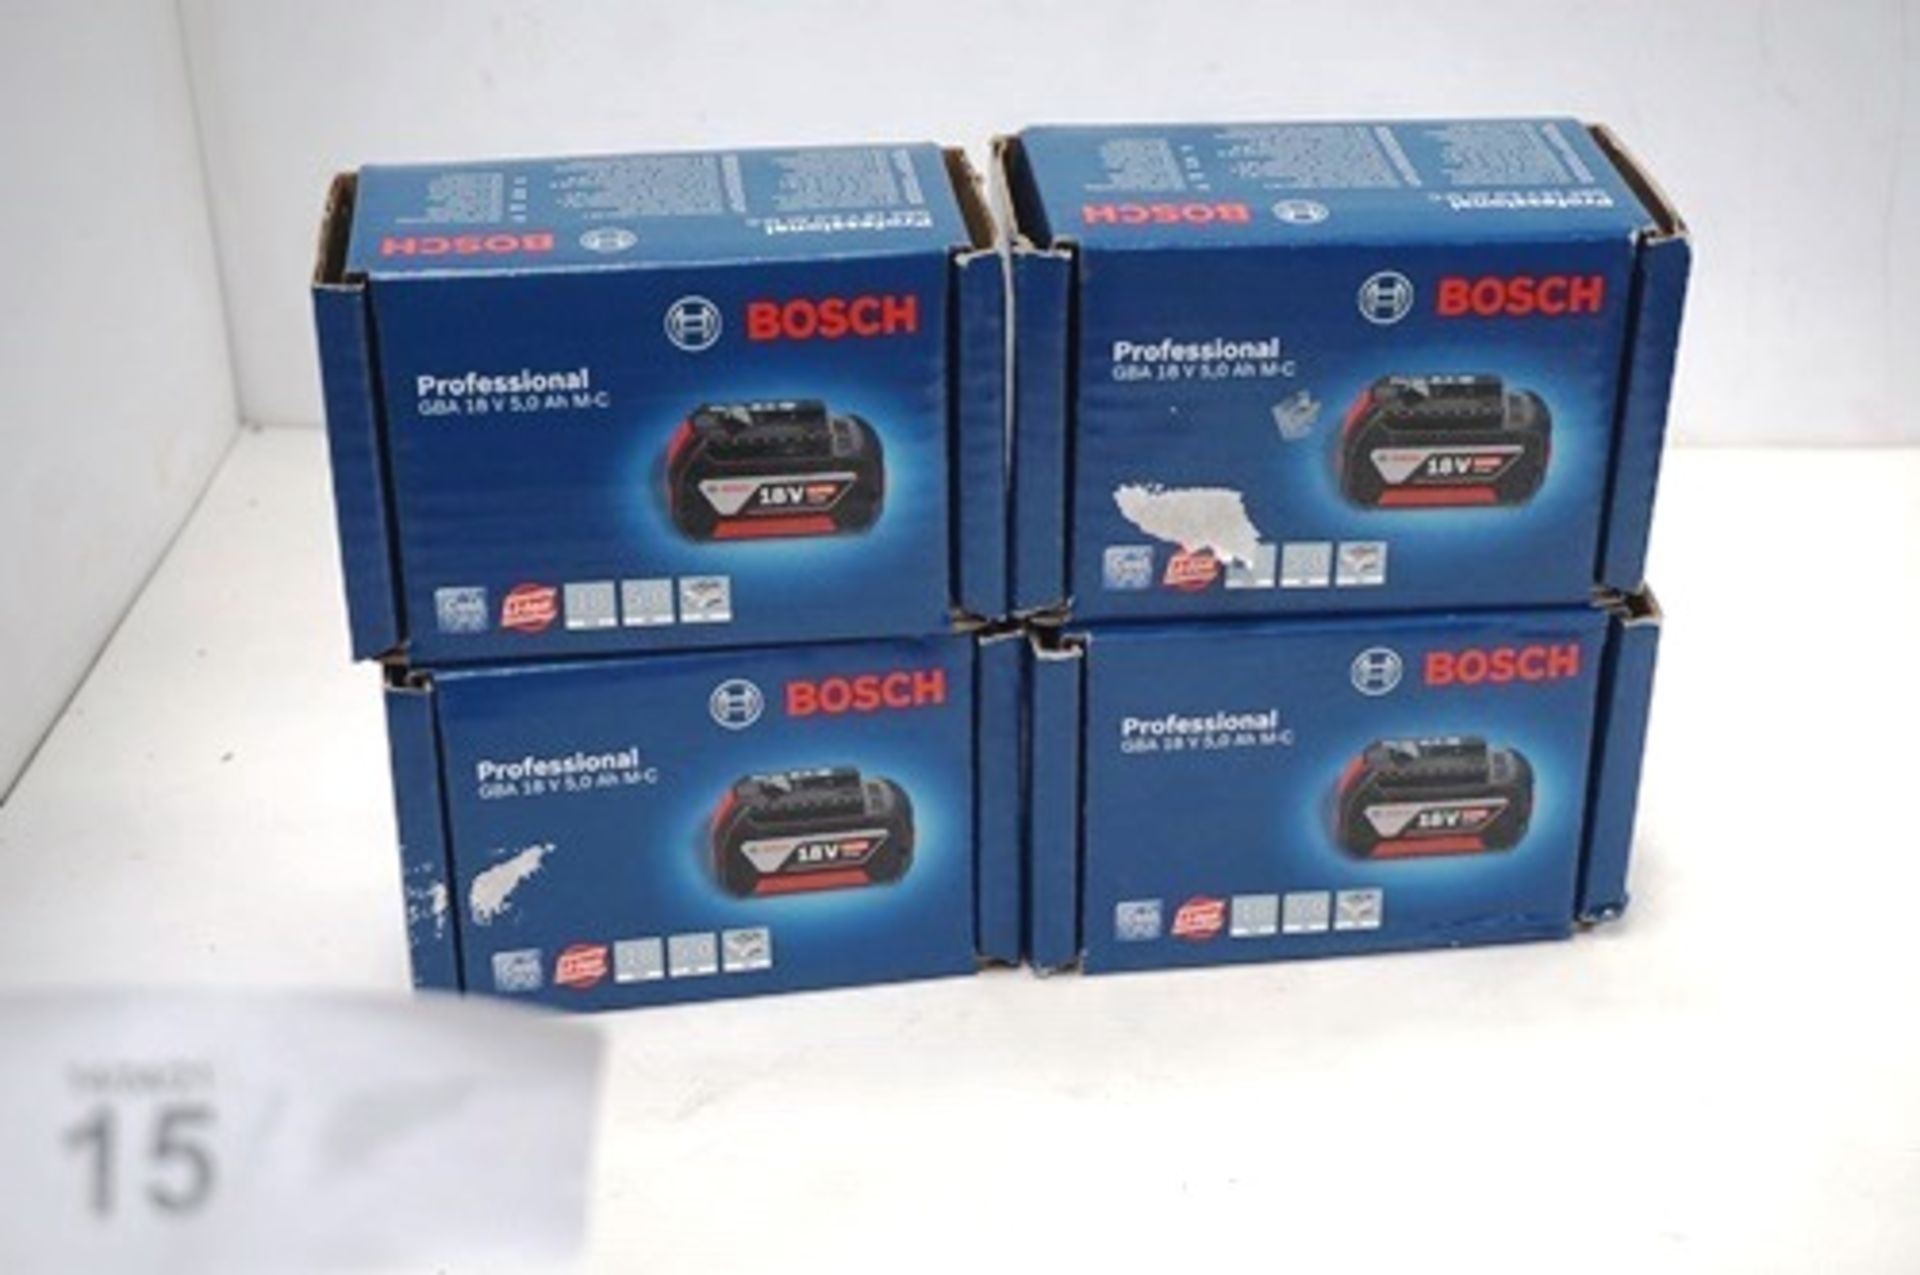 4 x Bosch GBA 18V 5.0Ah M-C batteries, model 1600A002U5, RRP £40.00 each (TC3)